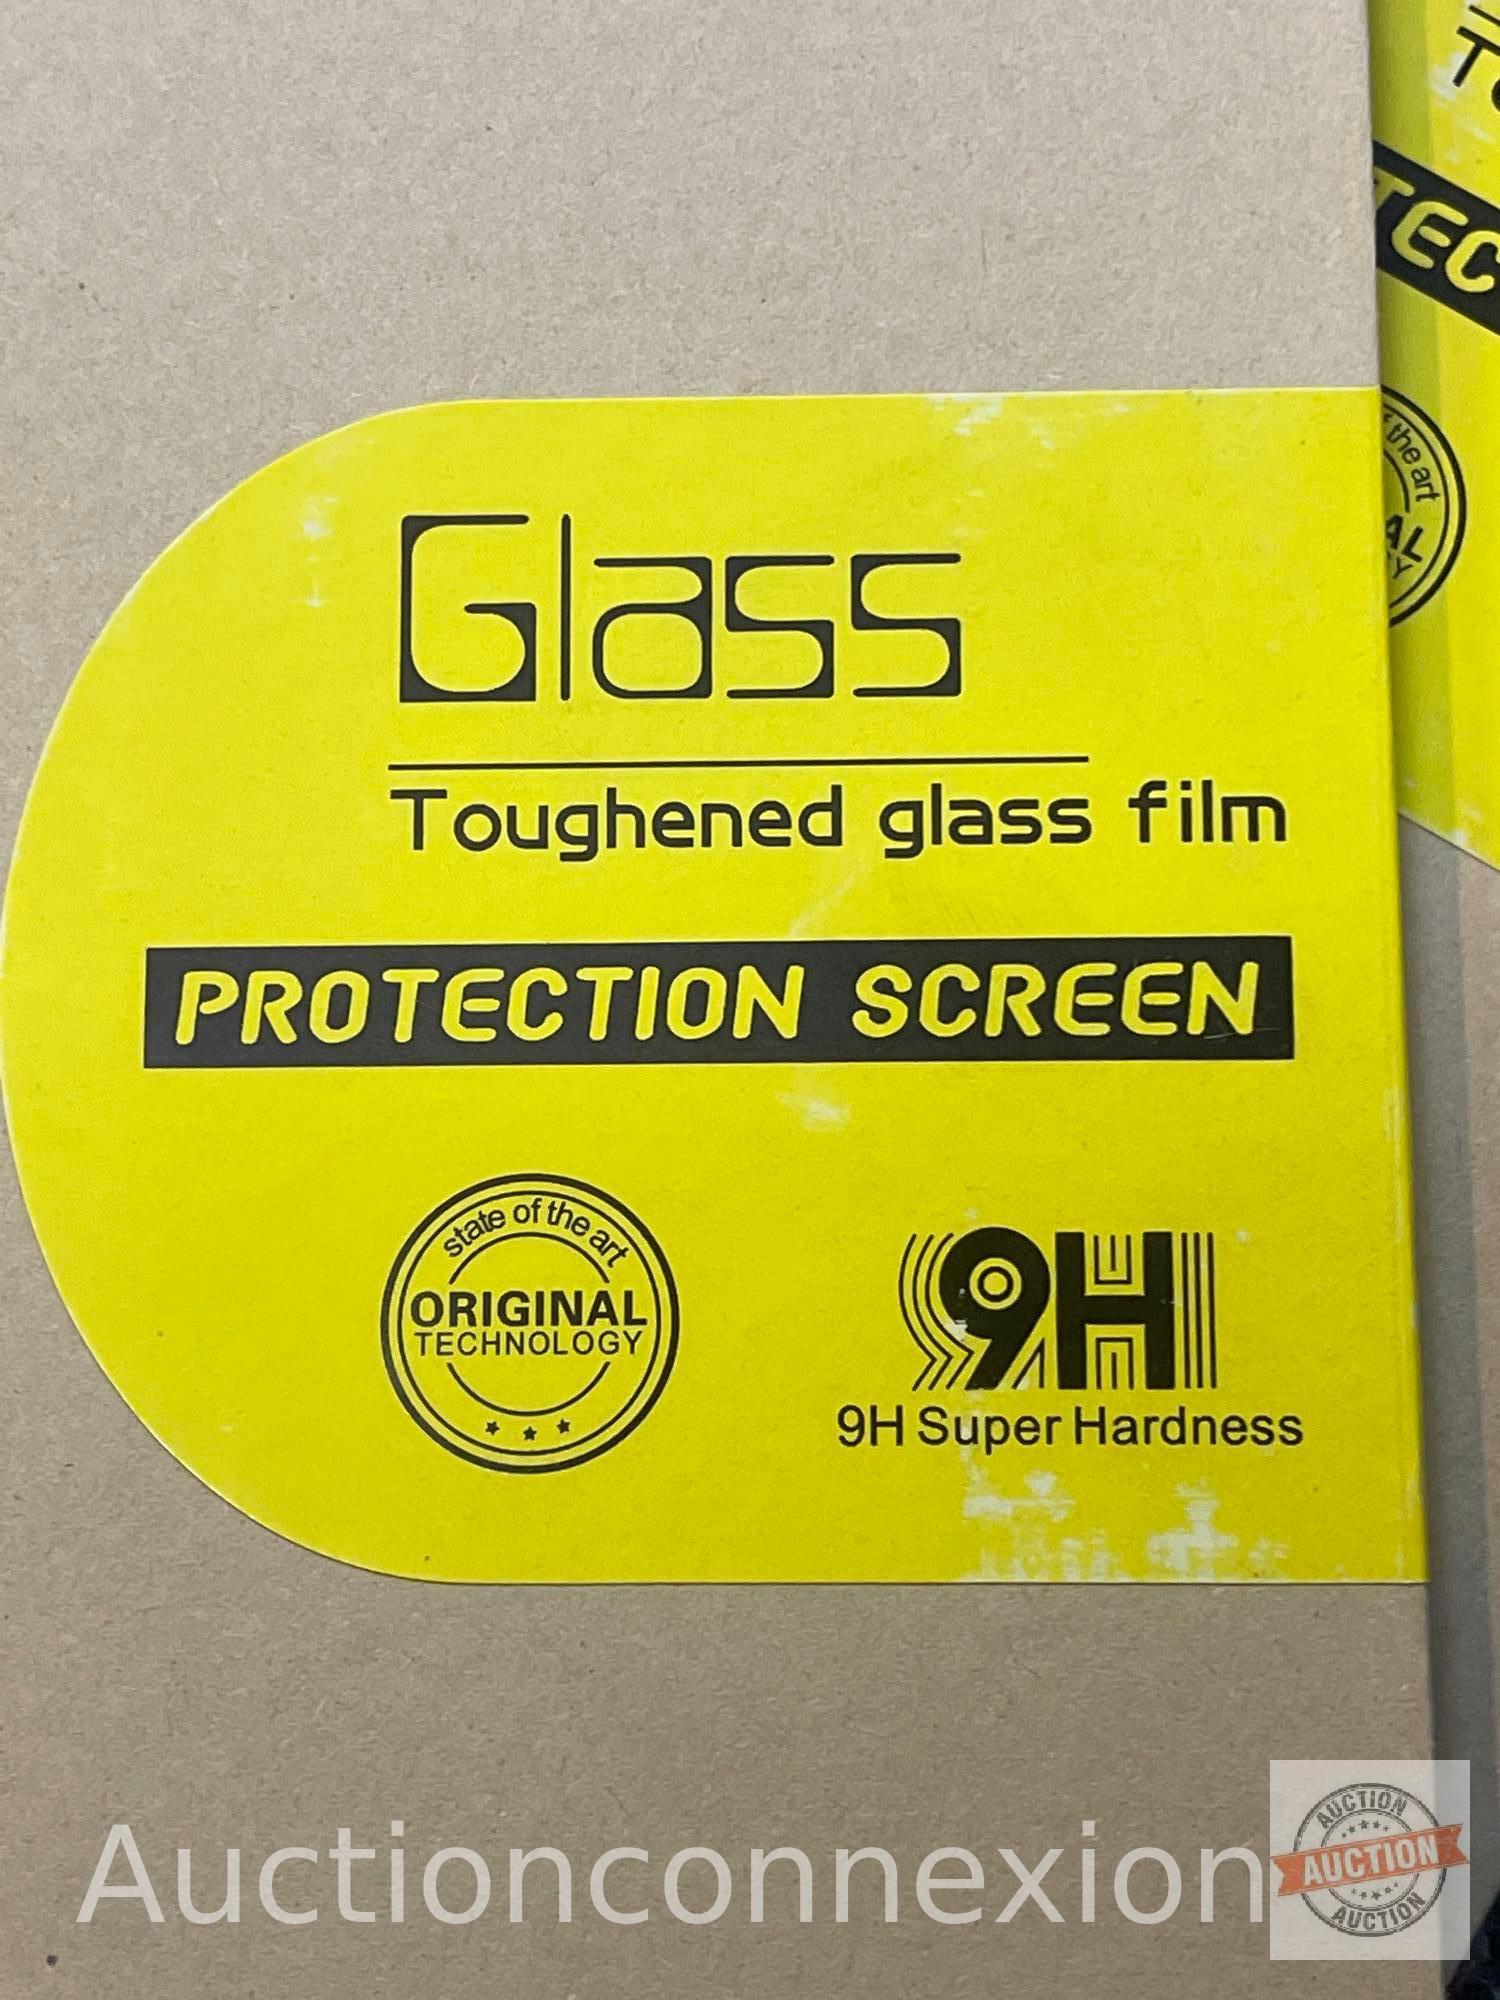 10 Glass Film Protection Screens, 9H Super Hard, 9"hx6.5"w